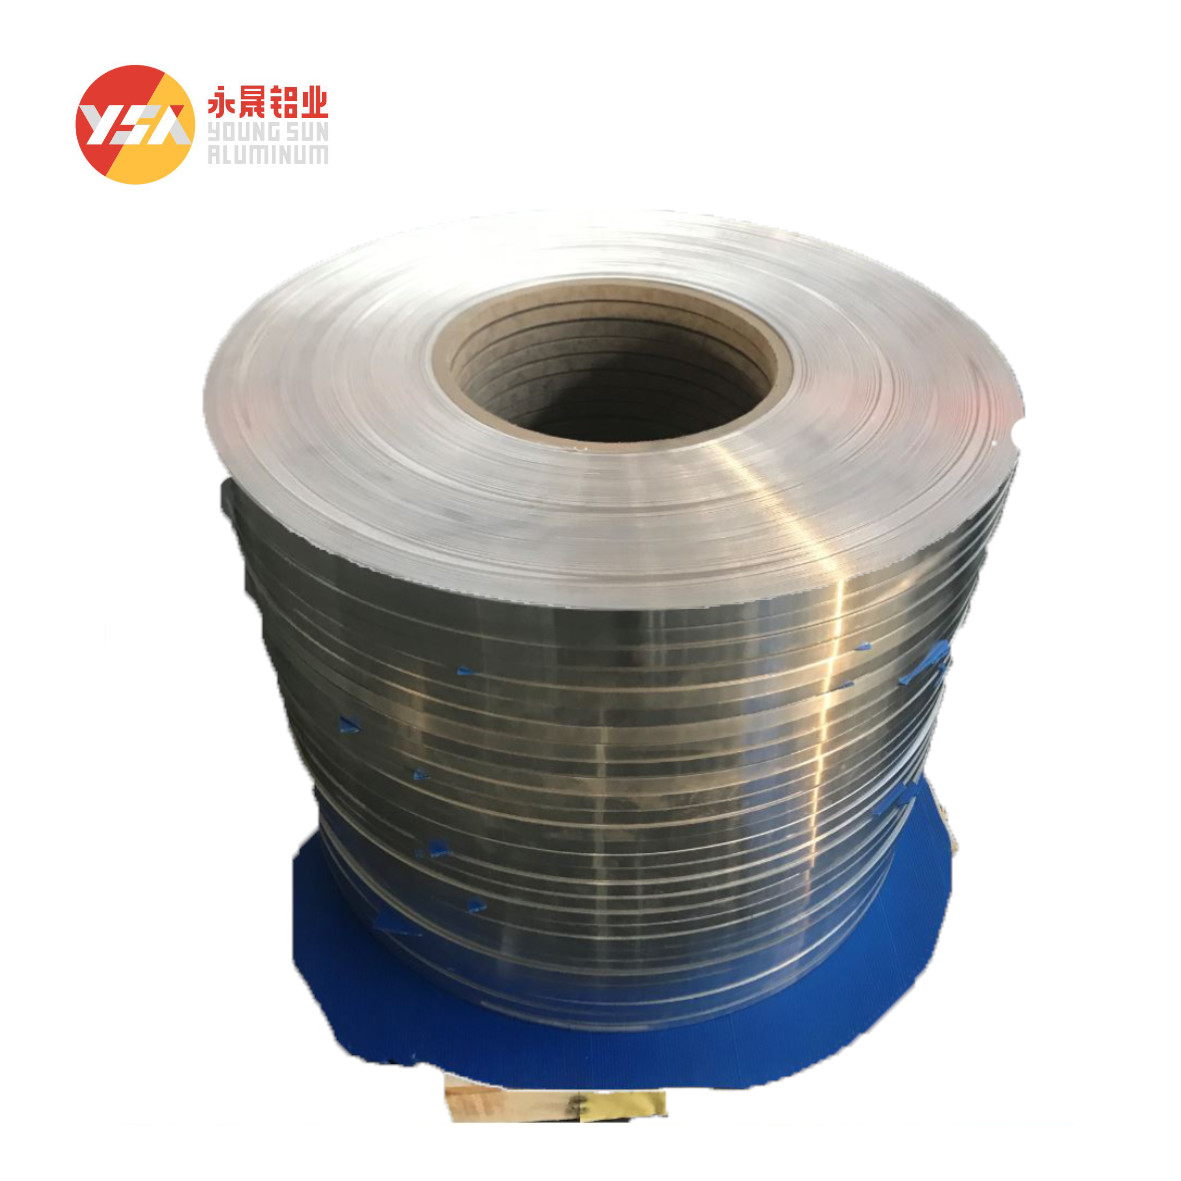 China China Manufacturer Aluminum Divider Strip 5005 Newest Design Aluminum Alloy Strip wholesale